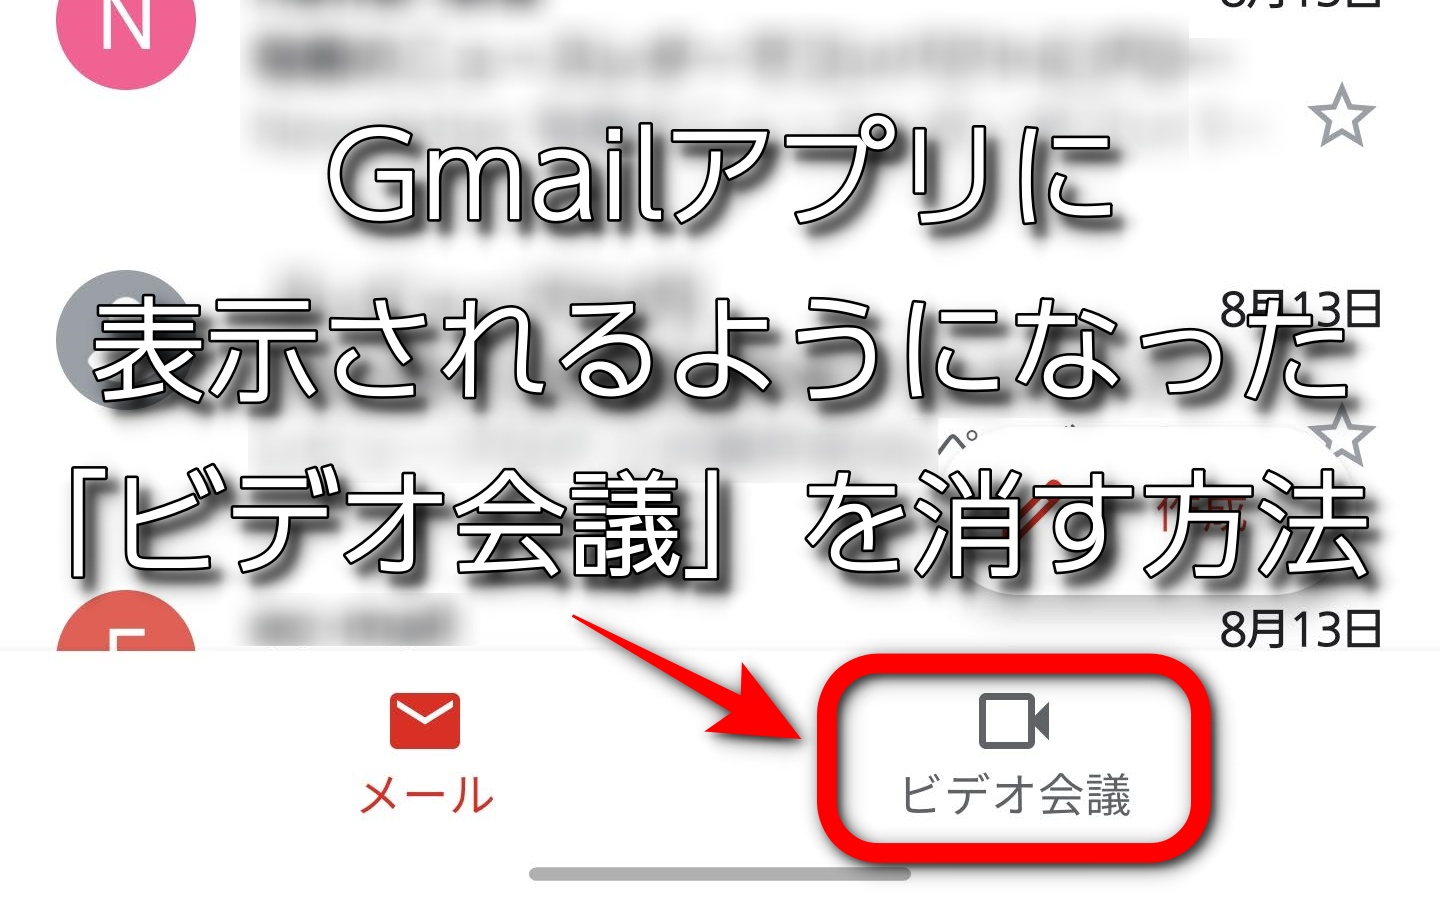 Tips Gmailアプリで下部に表示されるようになった テレビ会議 アイコンを削除 非表示 する方法 ひとぅブログ